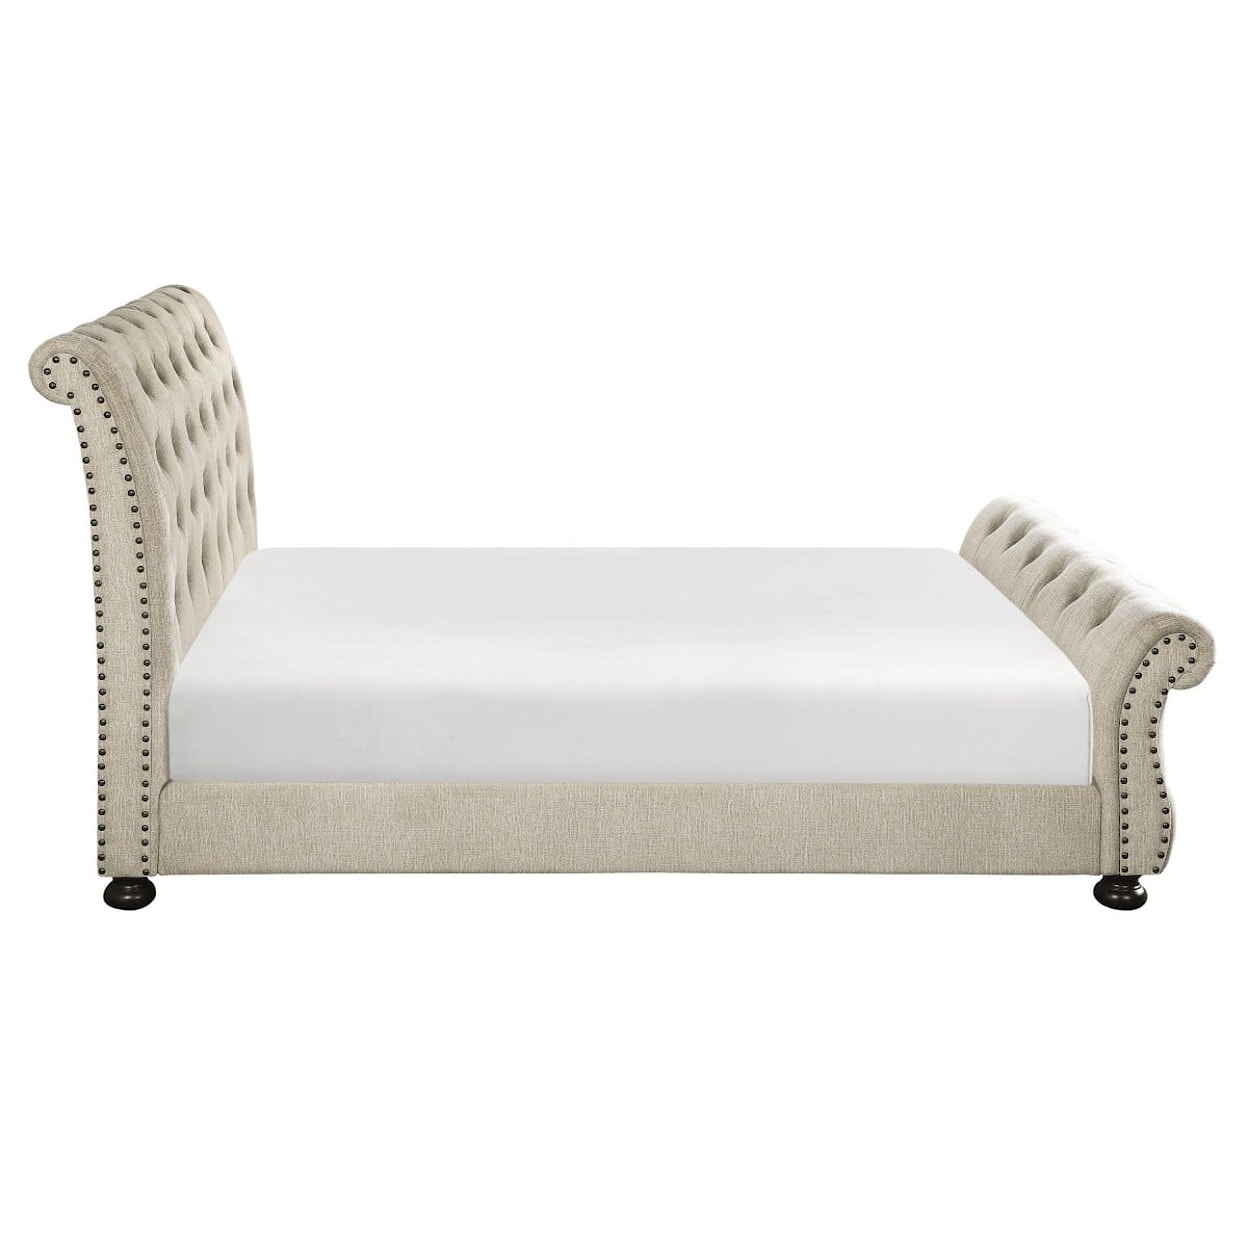 Homelegance Furniture Crofton King Bed